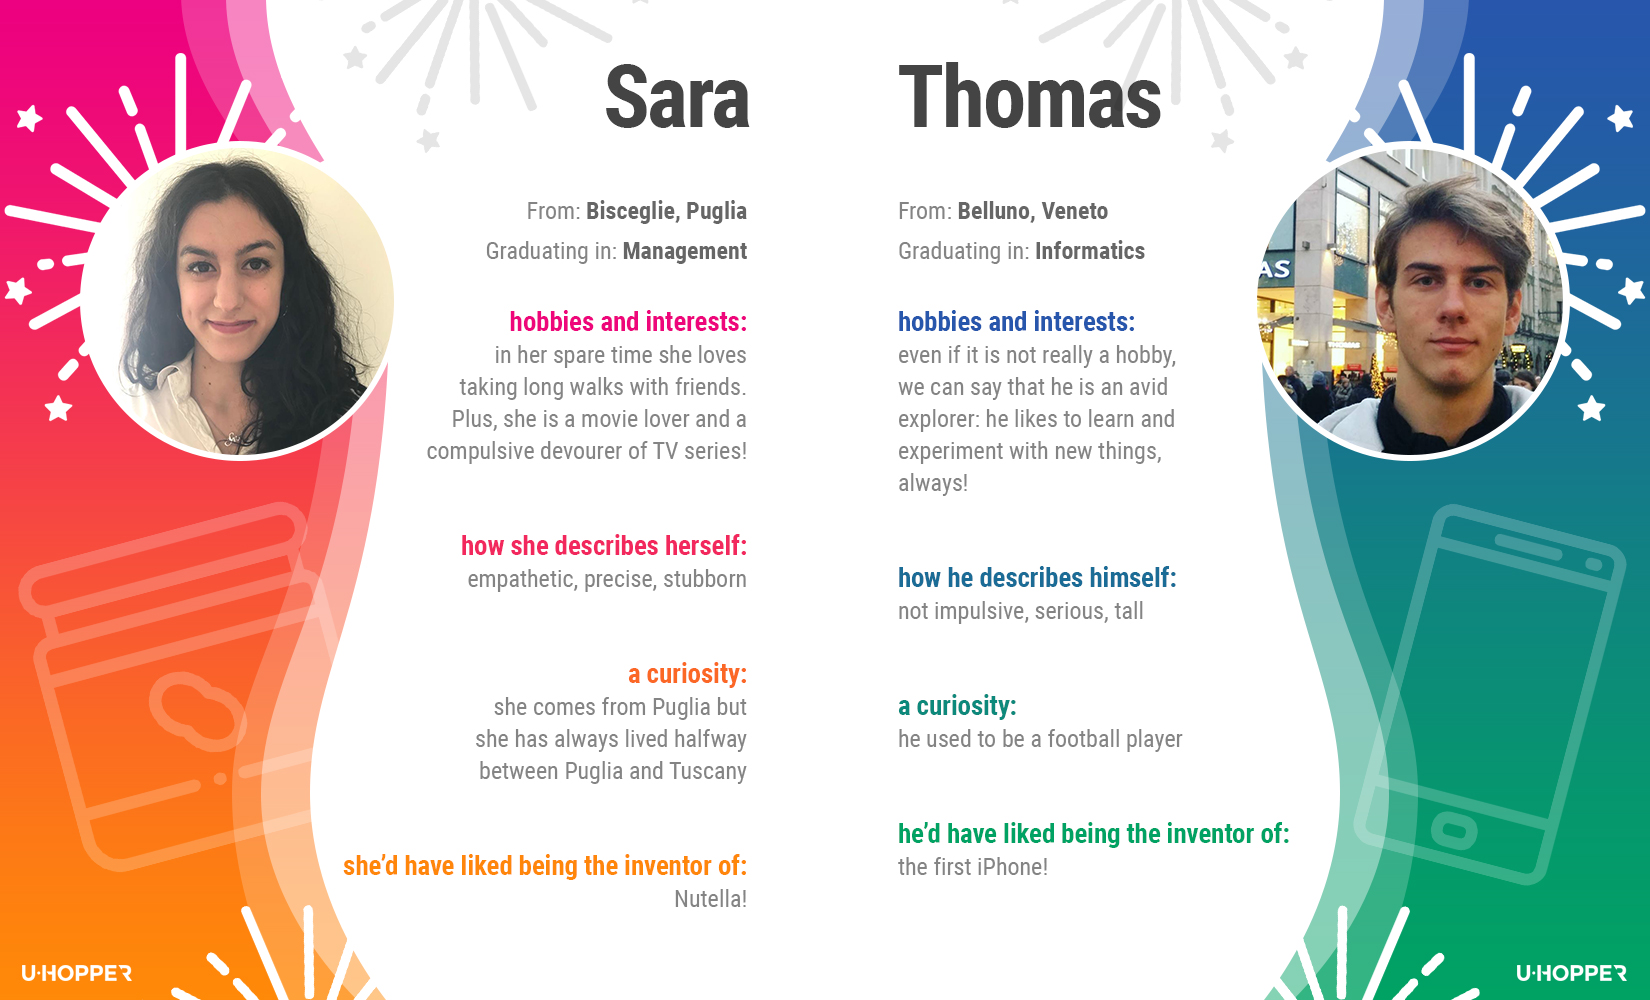 Sara and Thomas